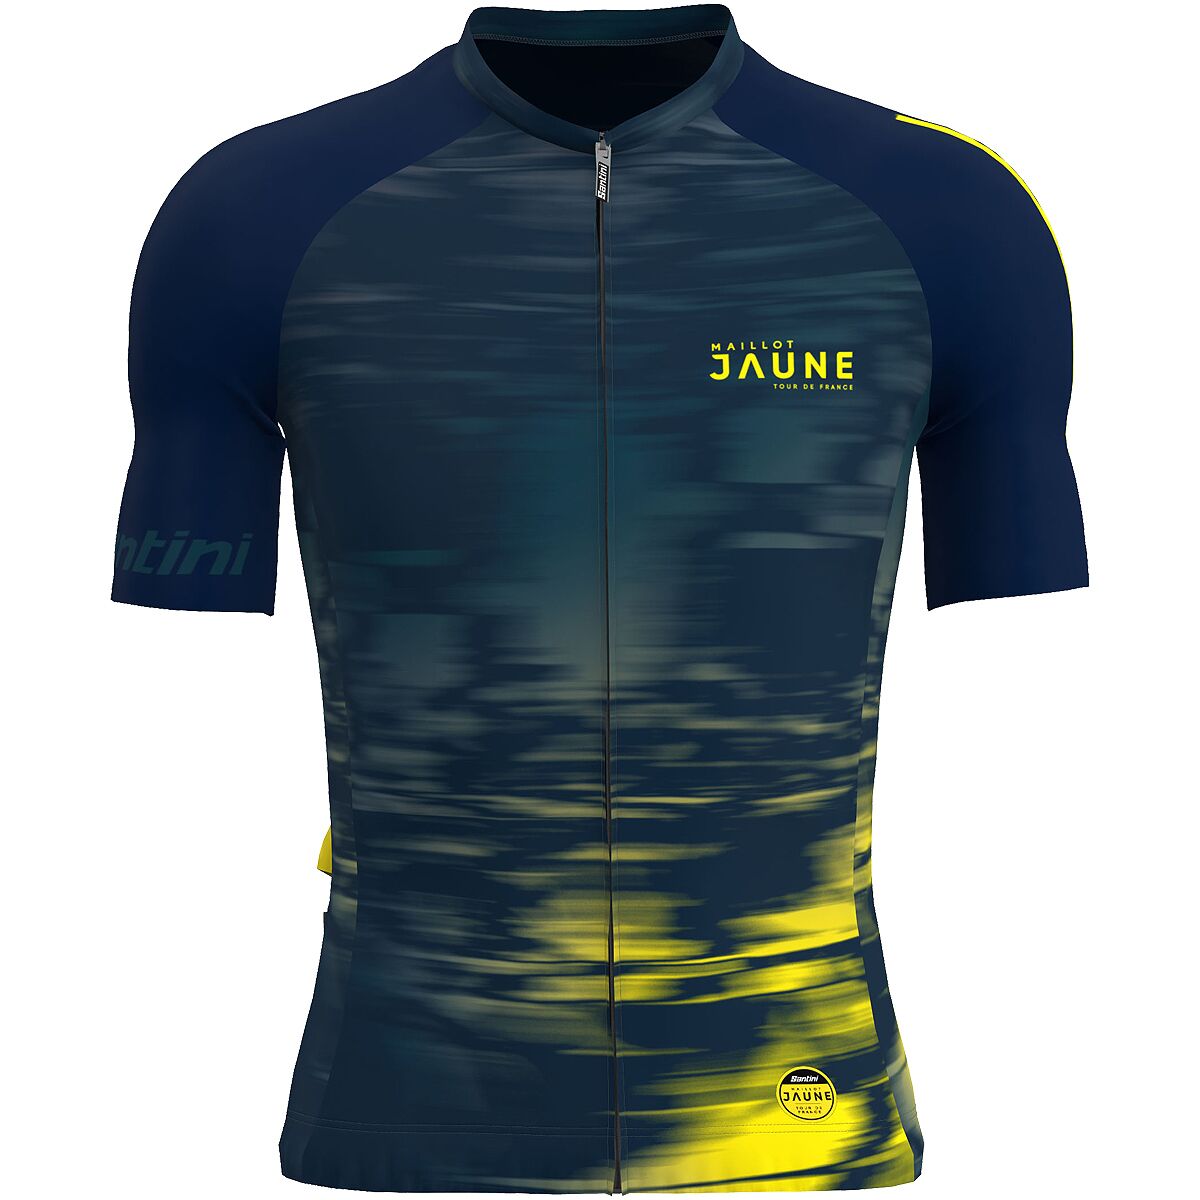 Santini Le Maillot Jaune Espirit Cycling Jersey - Men's - Men